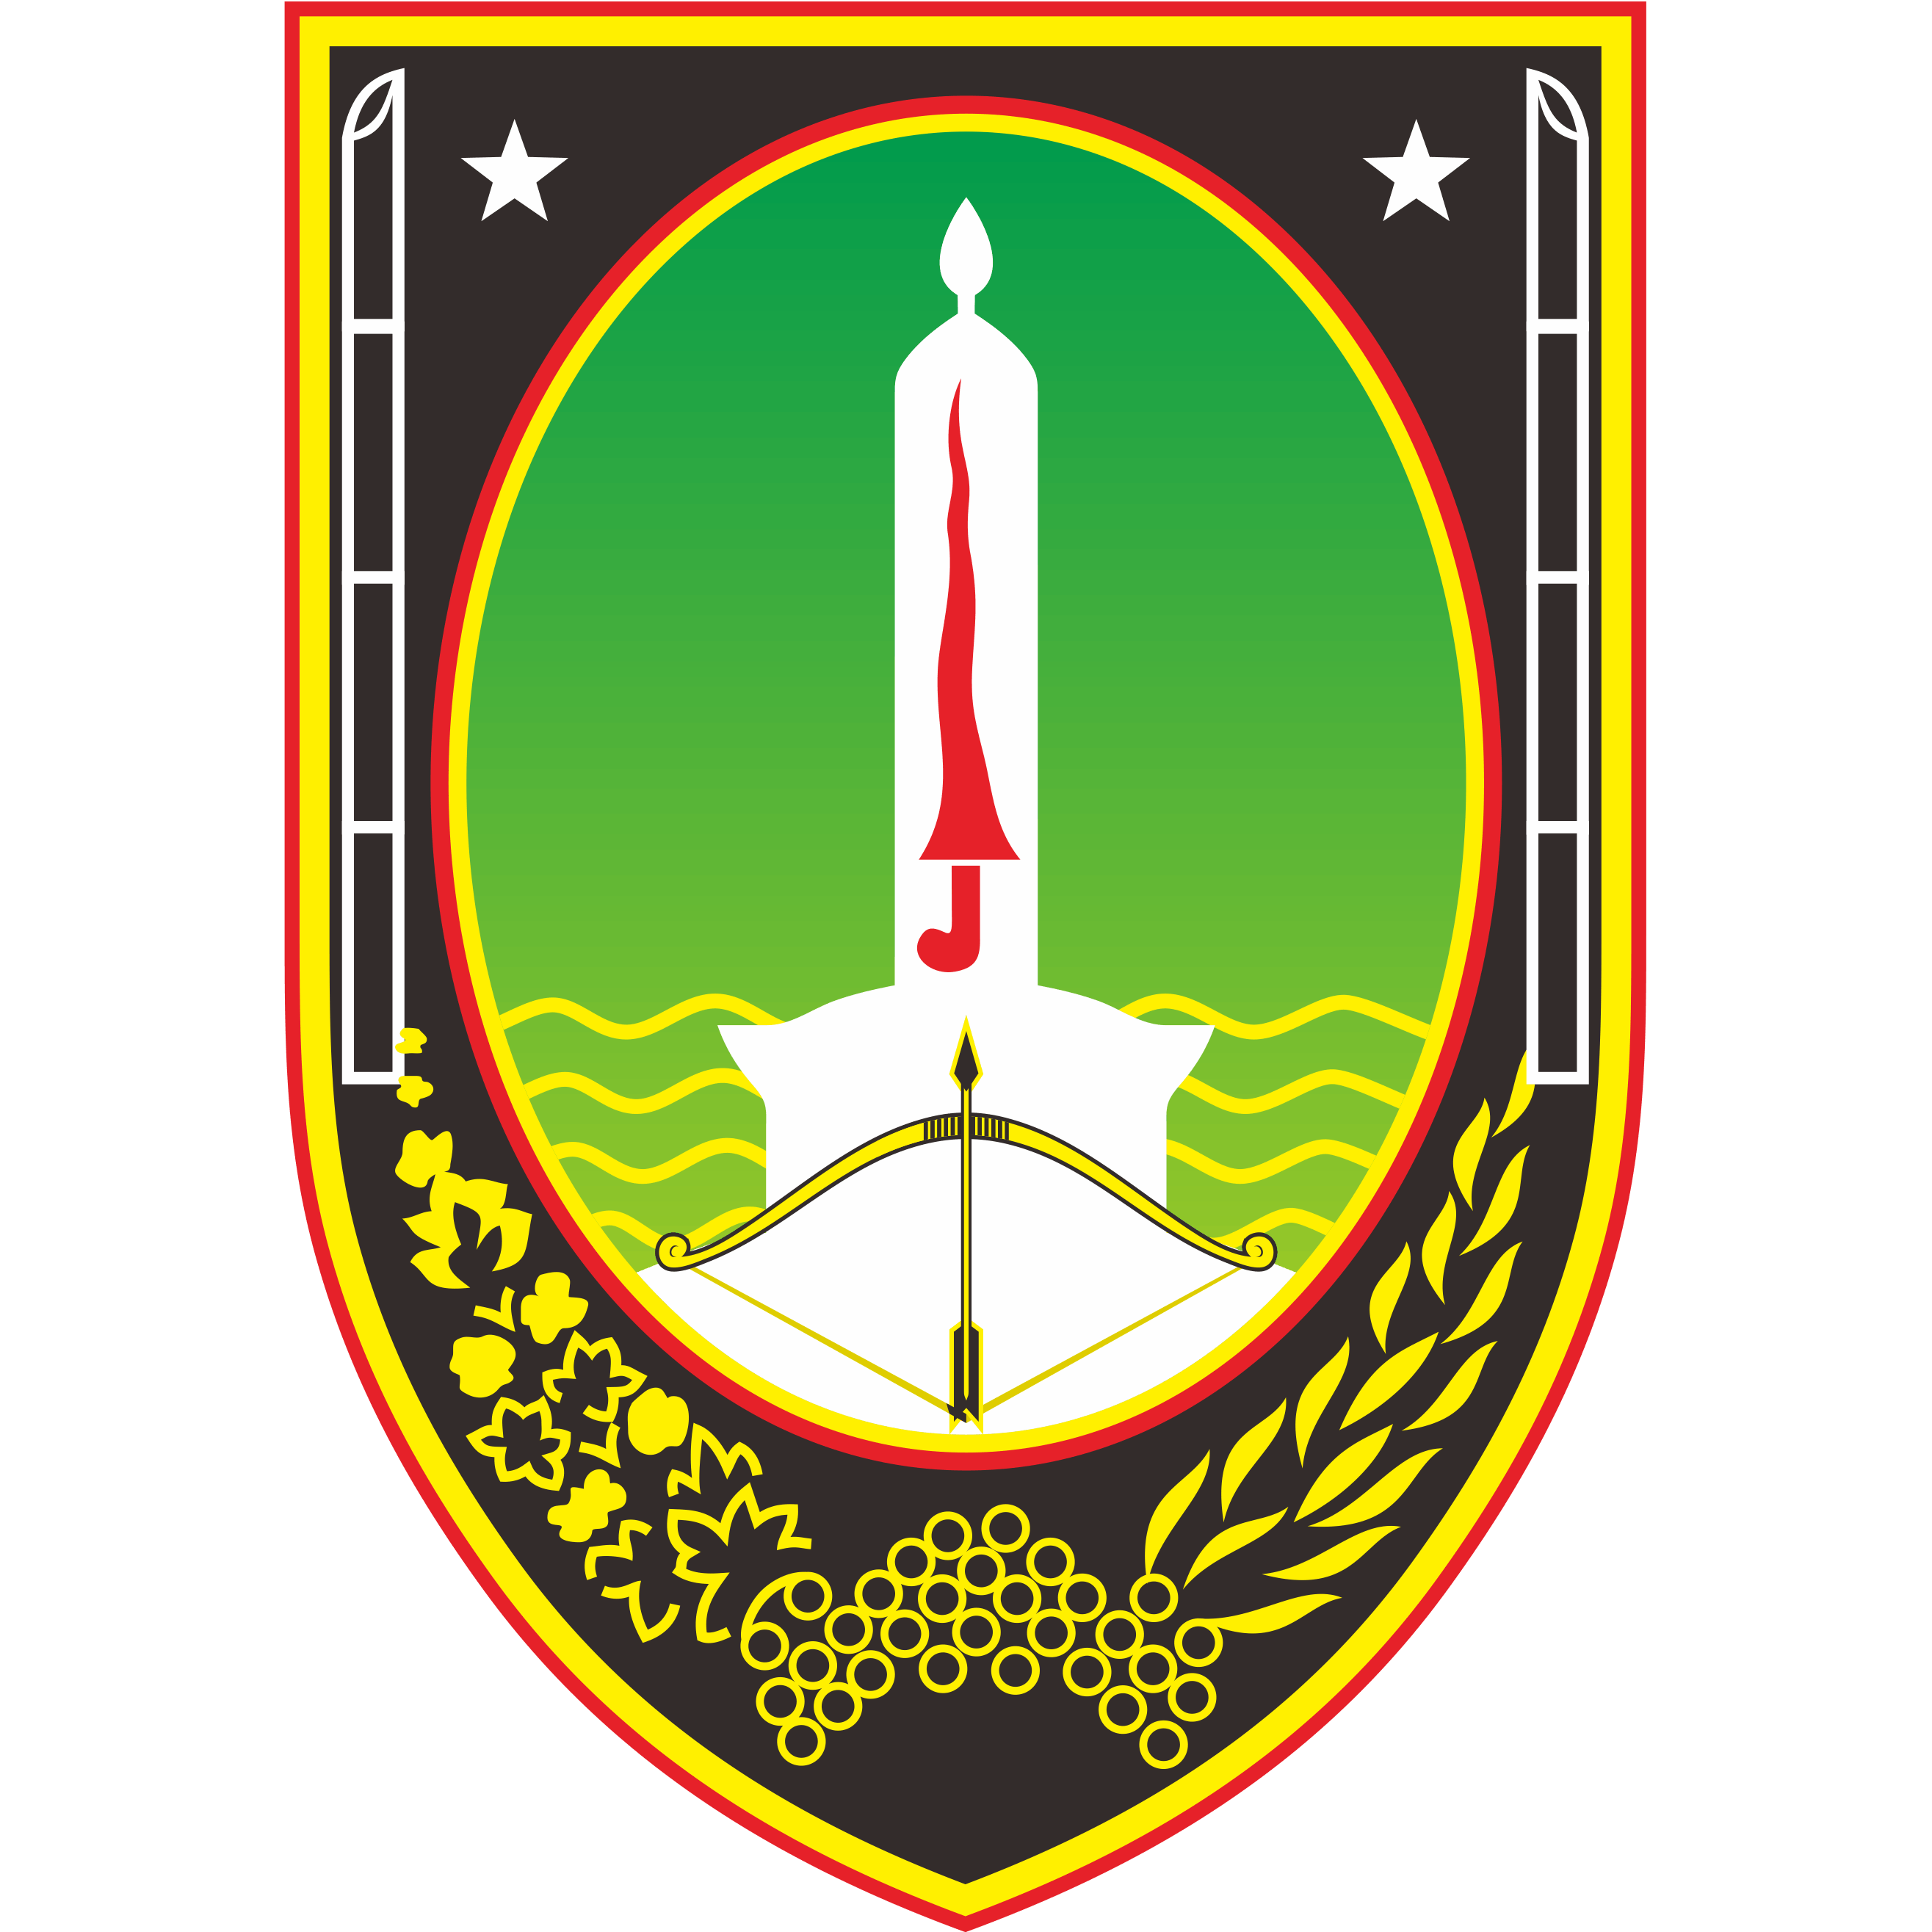 Logo Surakarta